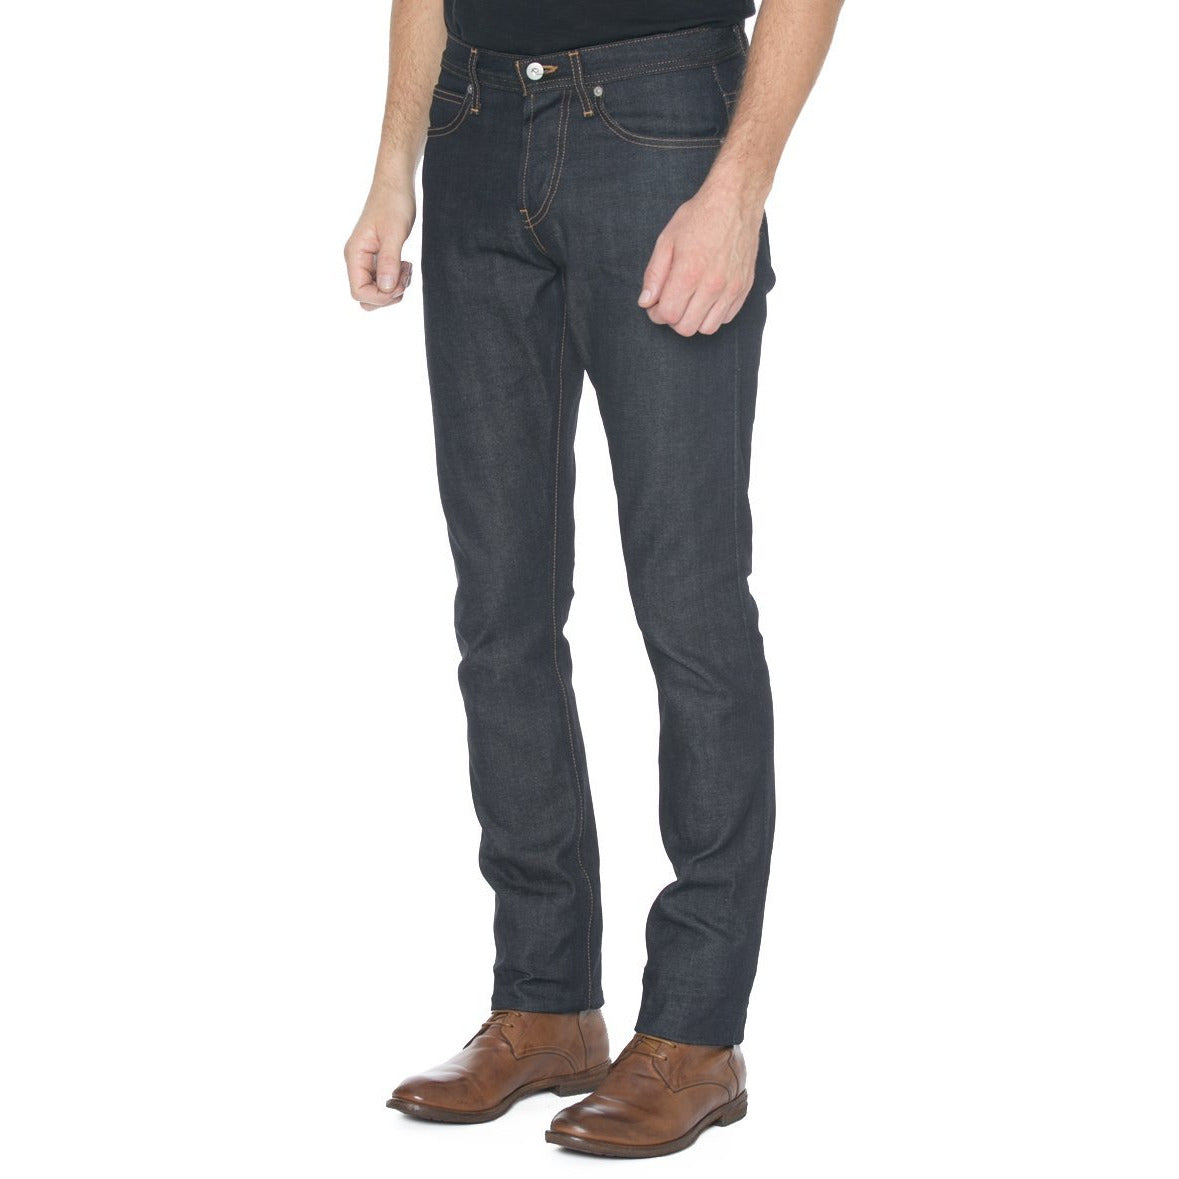 Indigo Slight Fit 12.5 oz Denim Jeans